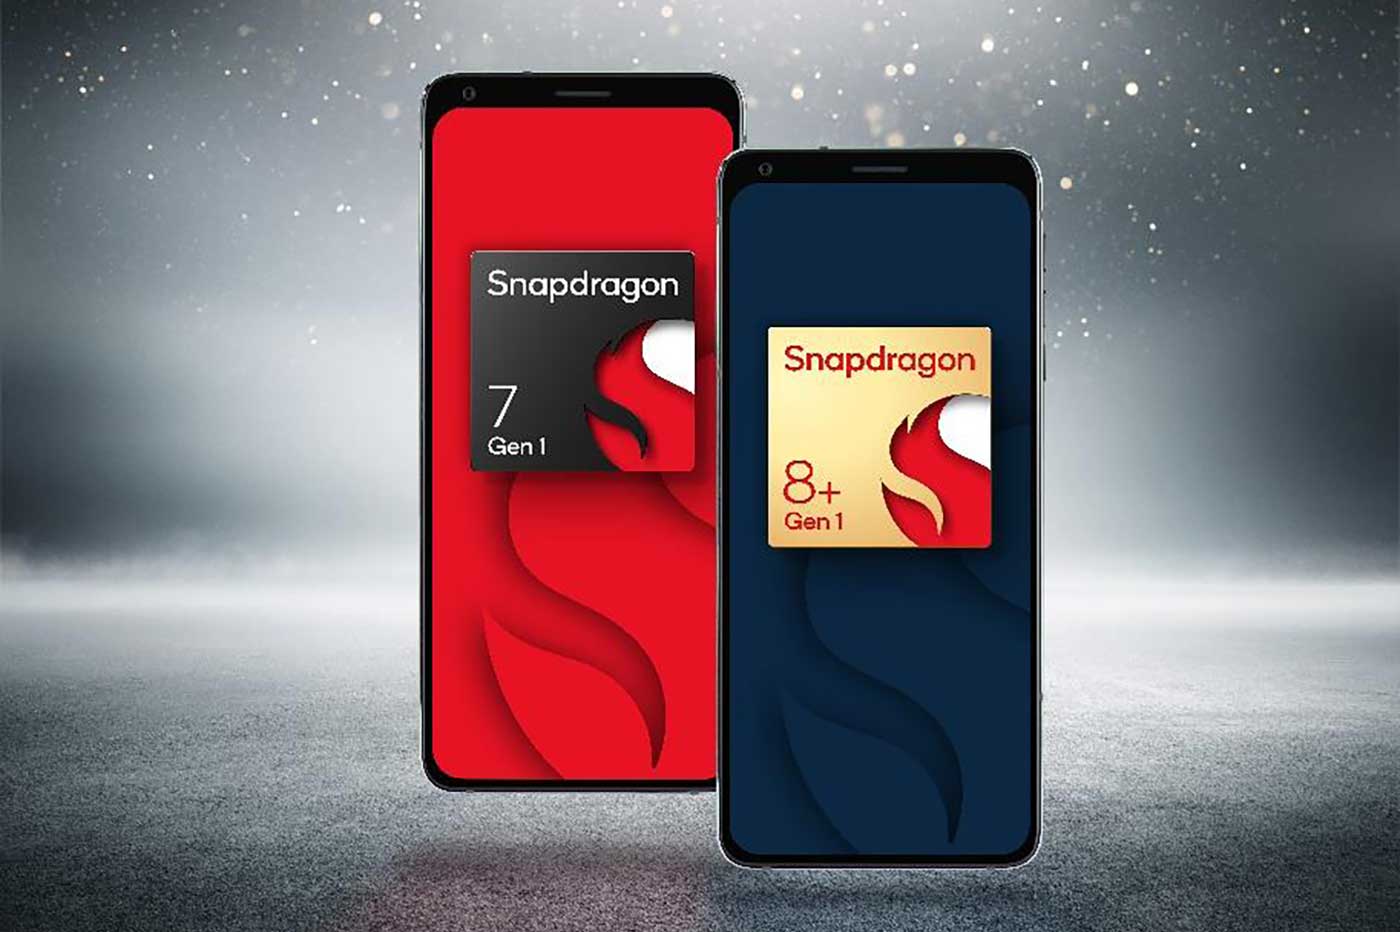 Qualcomm Snapdragon 8+ Gen 1 and Snapdragon 7 Gen 1